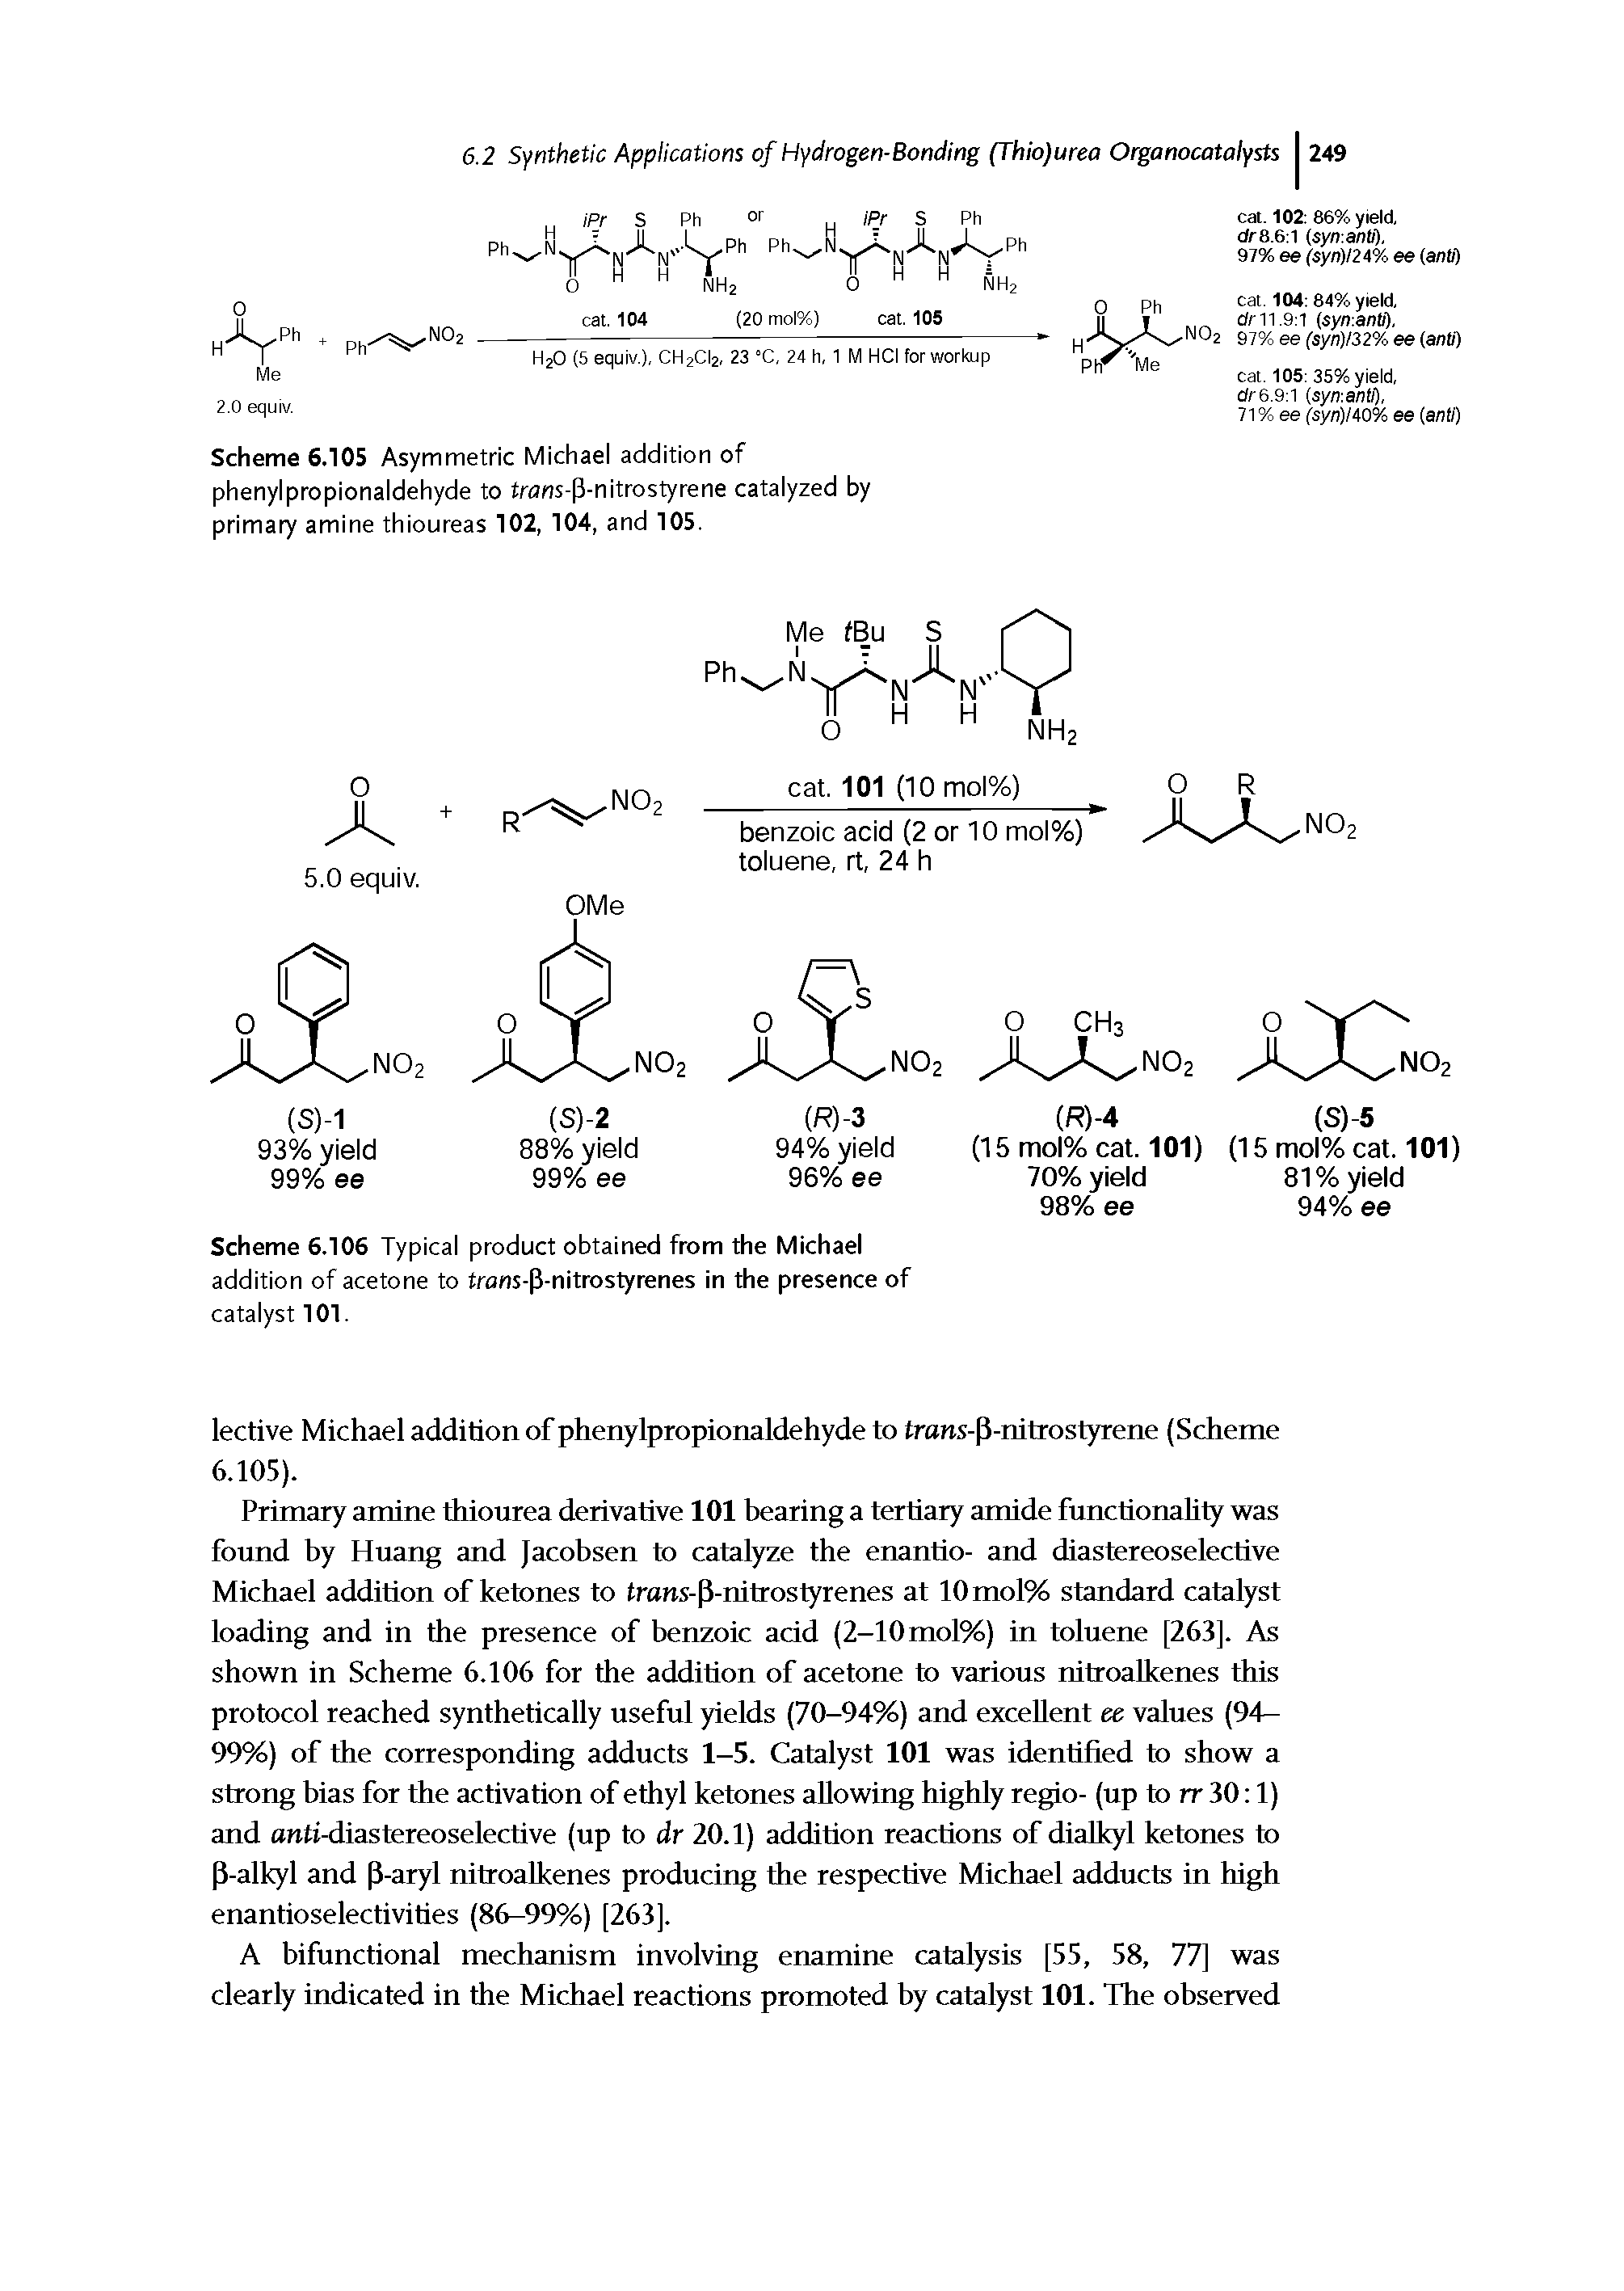 Scheme 6.105 Asymmetric Michael addition of phenylpropionaldehyde to trar)s- 3-nitrostyrene catalyzed by primary amine thioureas 102, 104, and 105.